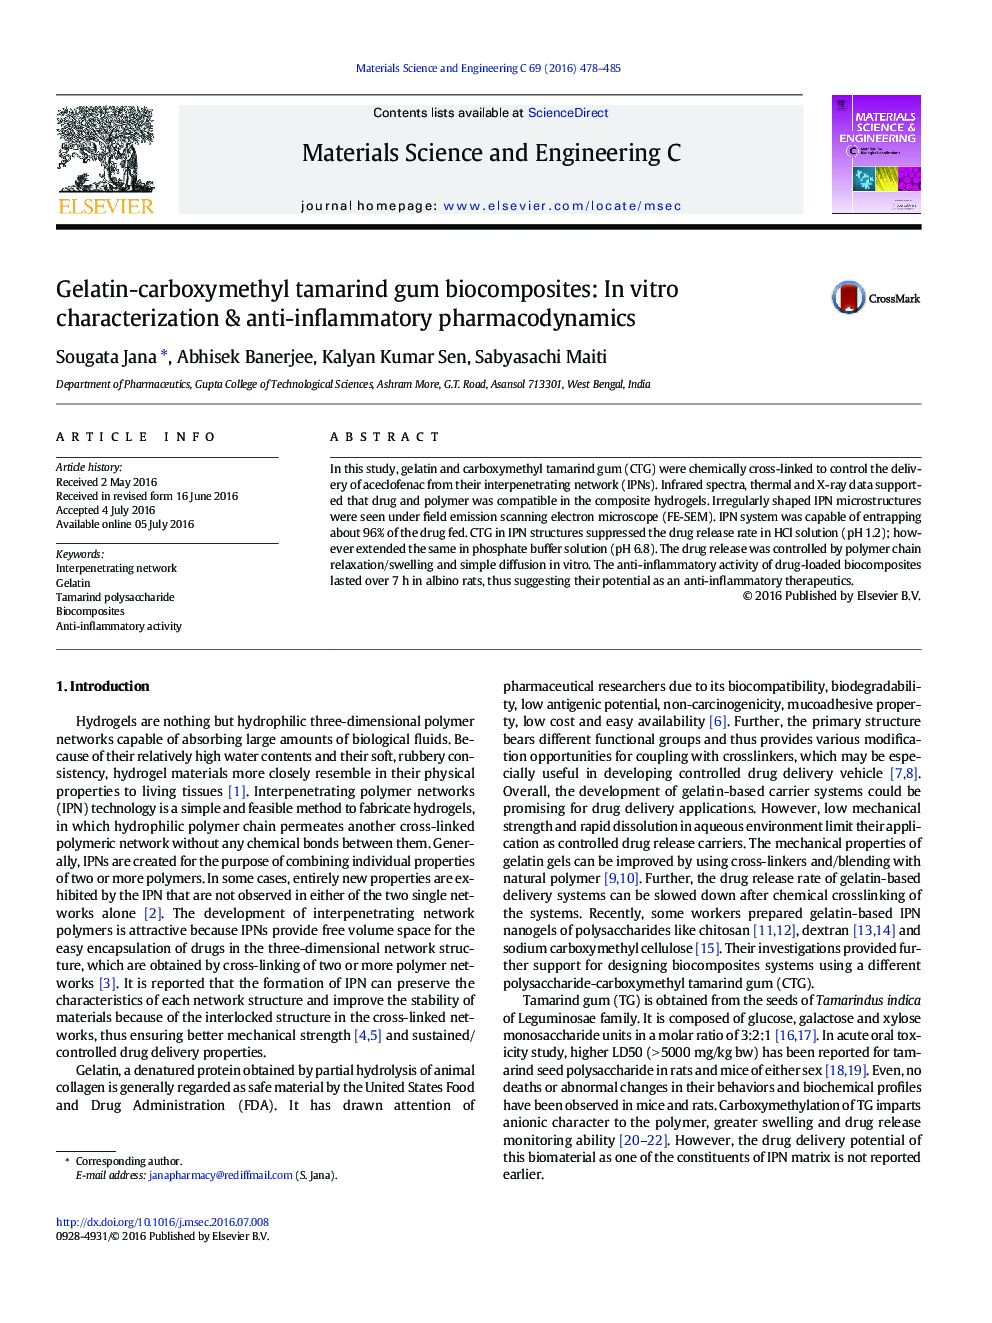 Gelatin-carboxymethyl tamarind gum biocomposites: In vitro characterization & anti-inflammatory pharmacodynamics